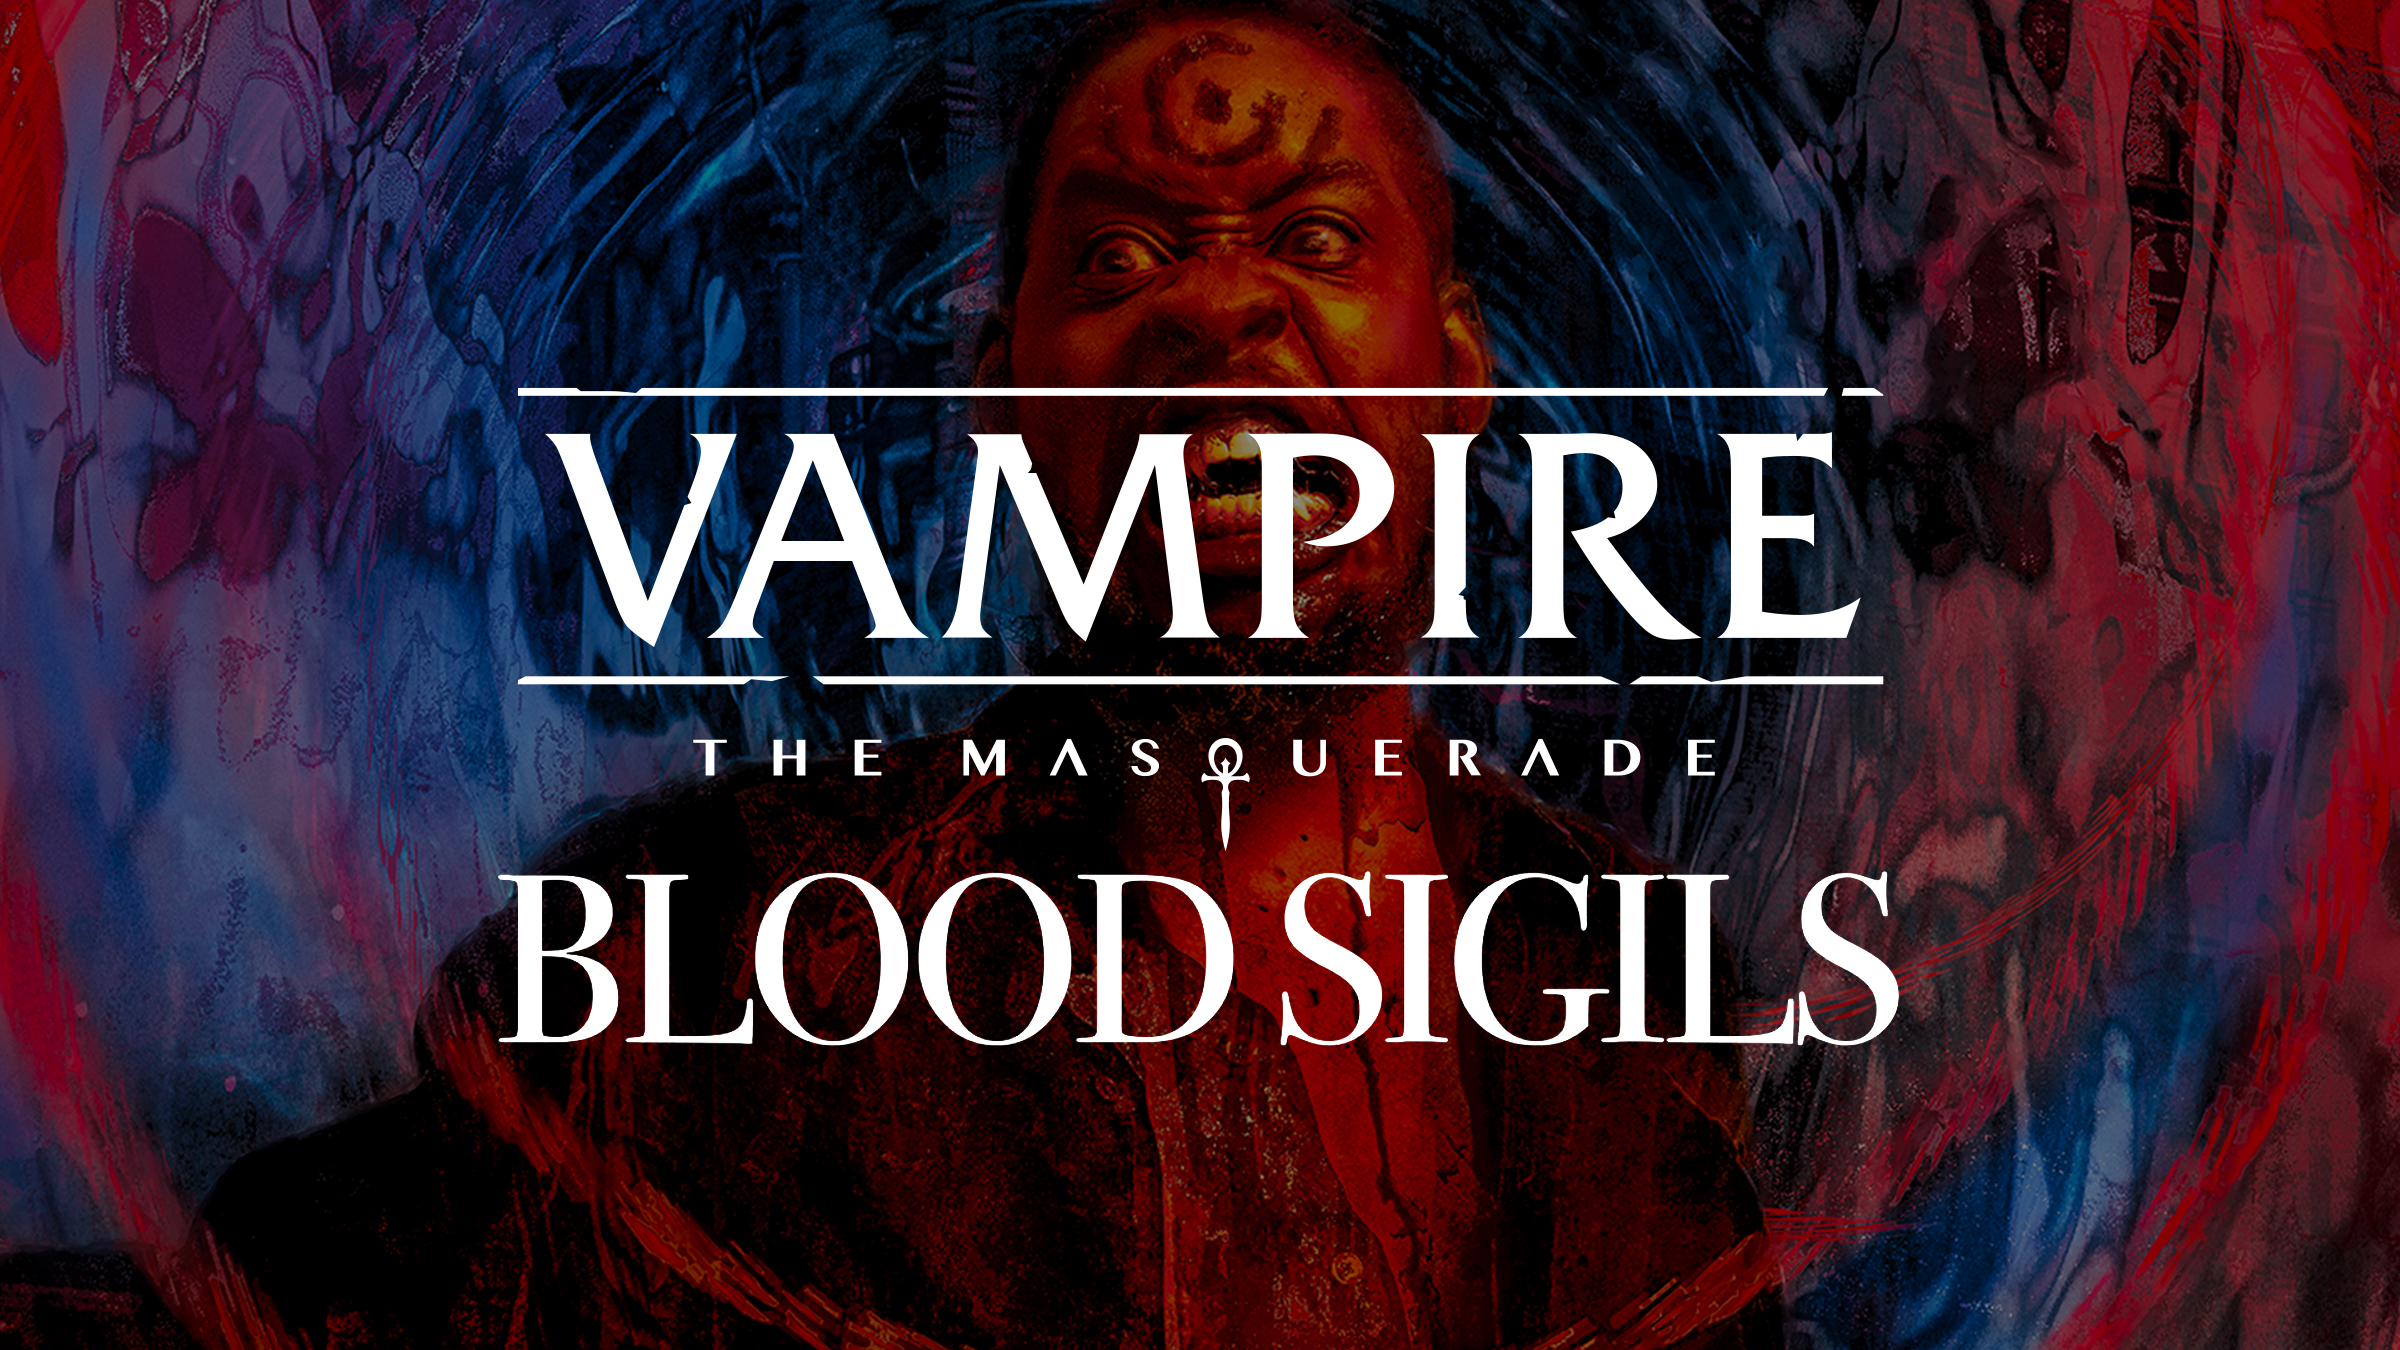 Vampire: The Masquerade 5th Edition: Fall of London - Renegade Game Studios, Vampire The Masquerade 5th Edition